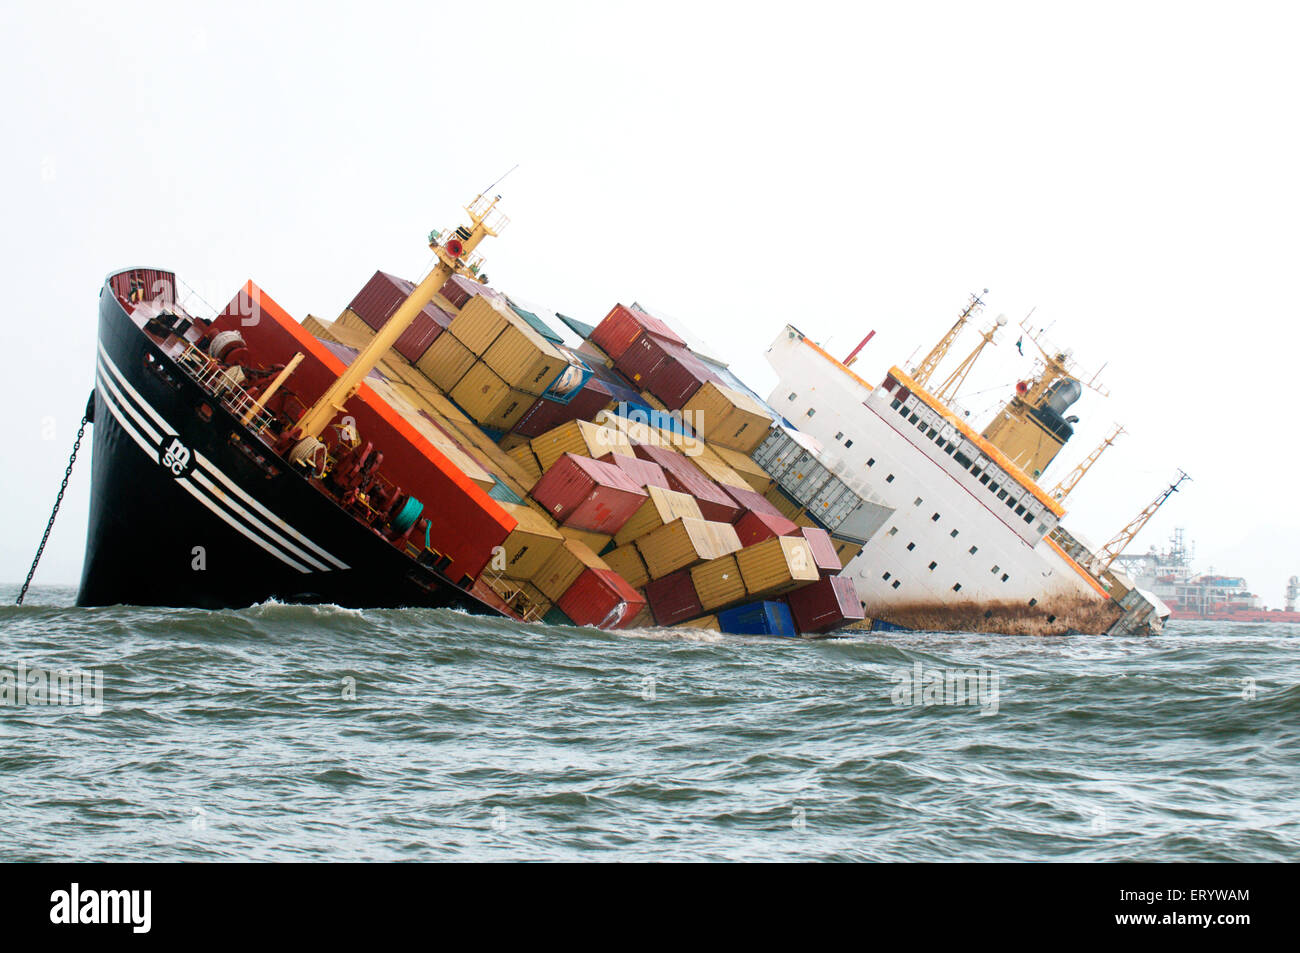 Das Containerschiff, das nach dem Zusammenprall in Arabian Sea Bombay Mumbai Maharashtra India Asia gefährlich kippte, sank Stockfoto